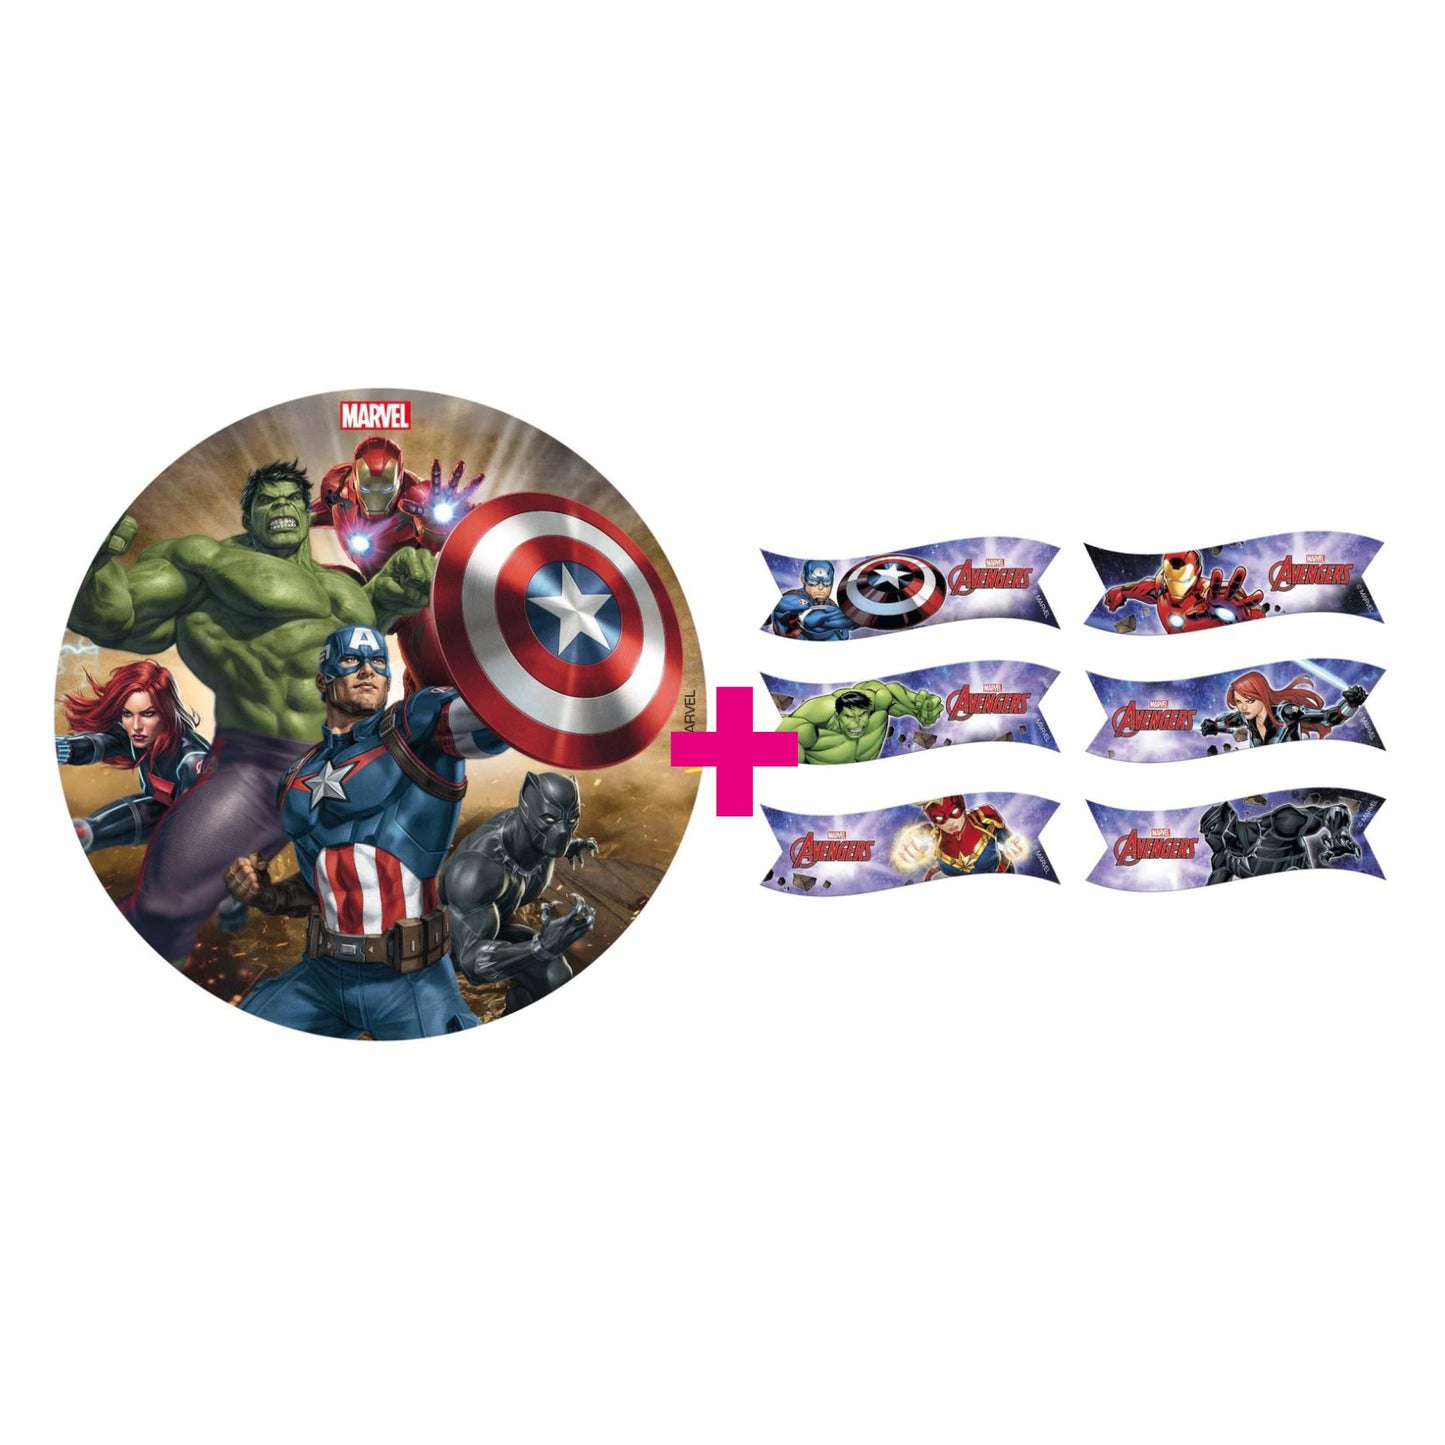 2er Set Avengers Tortenaufleger & Tortenflaggen